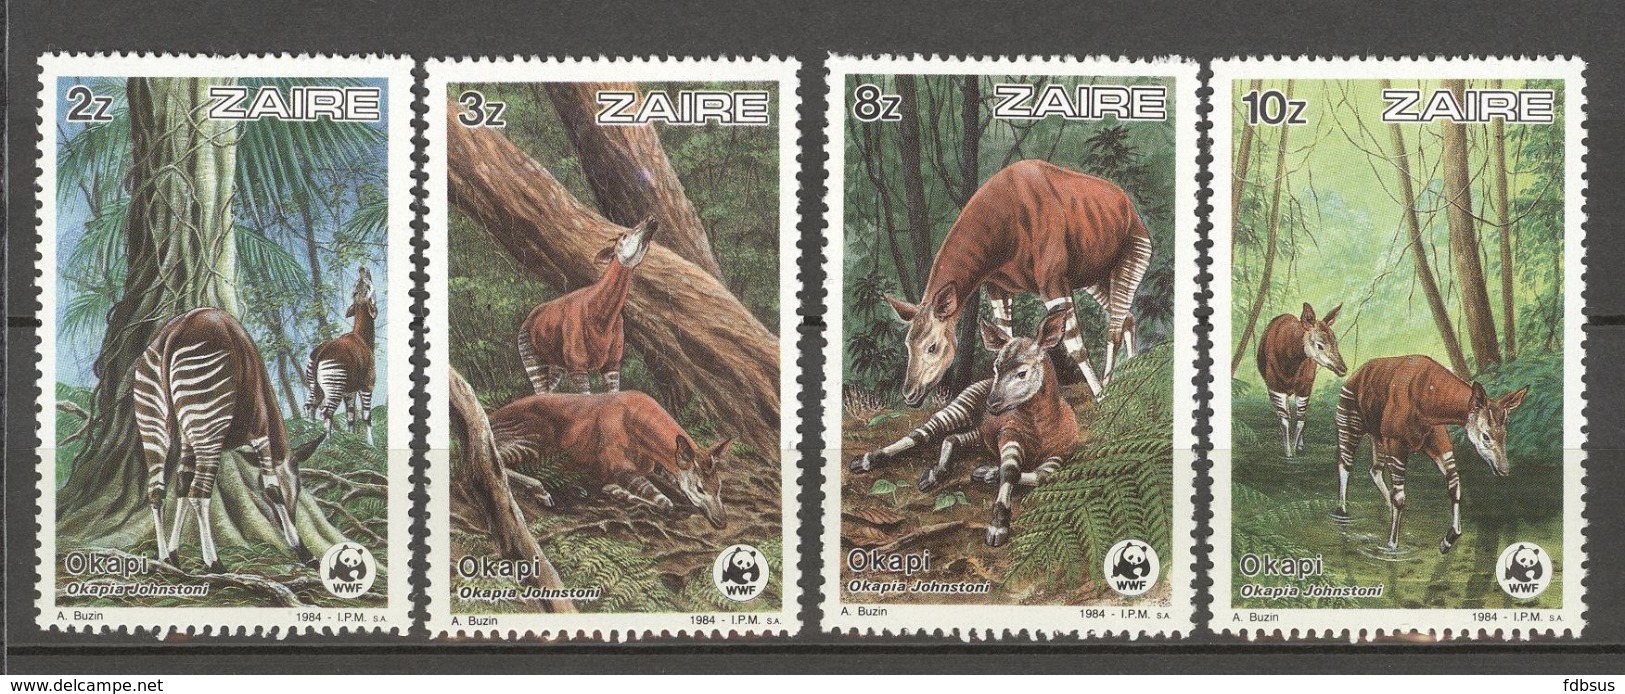 Serie 1984 Nrs 1253/56 ** - OKAPI - OKAPIA JOHNSTONI - COTE 13,00  EURO - WWF - A. BUZIN - Unused Stamps